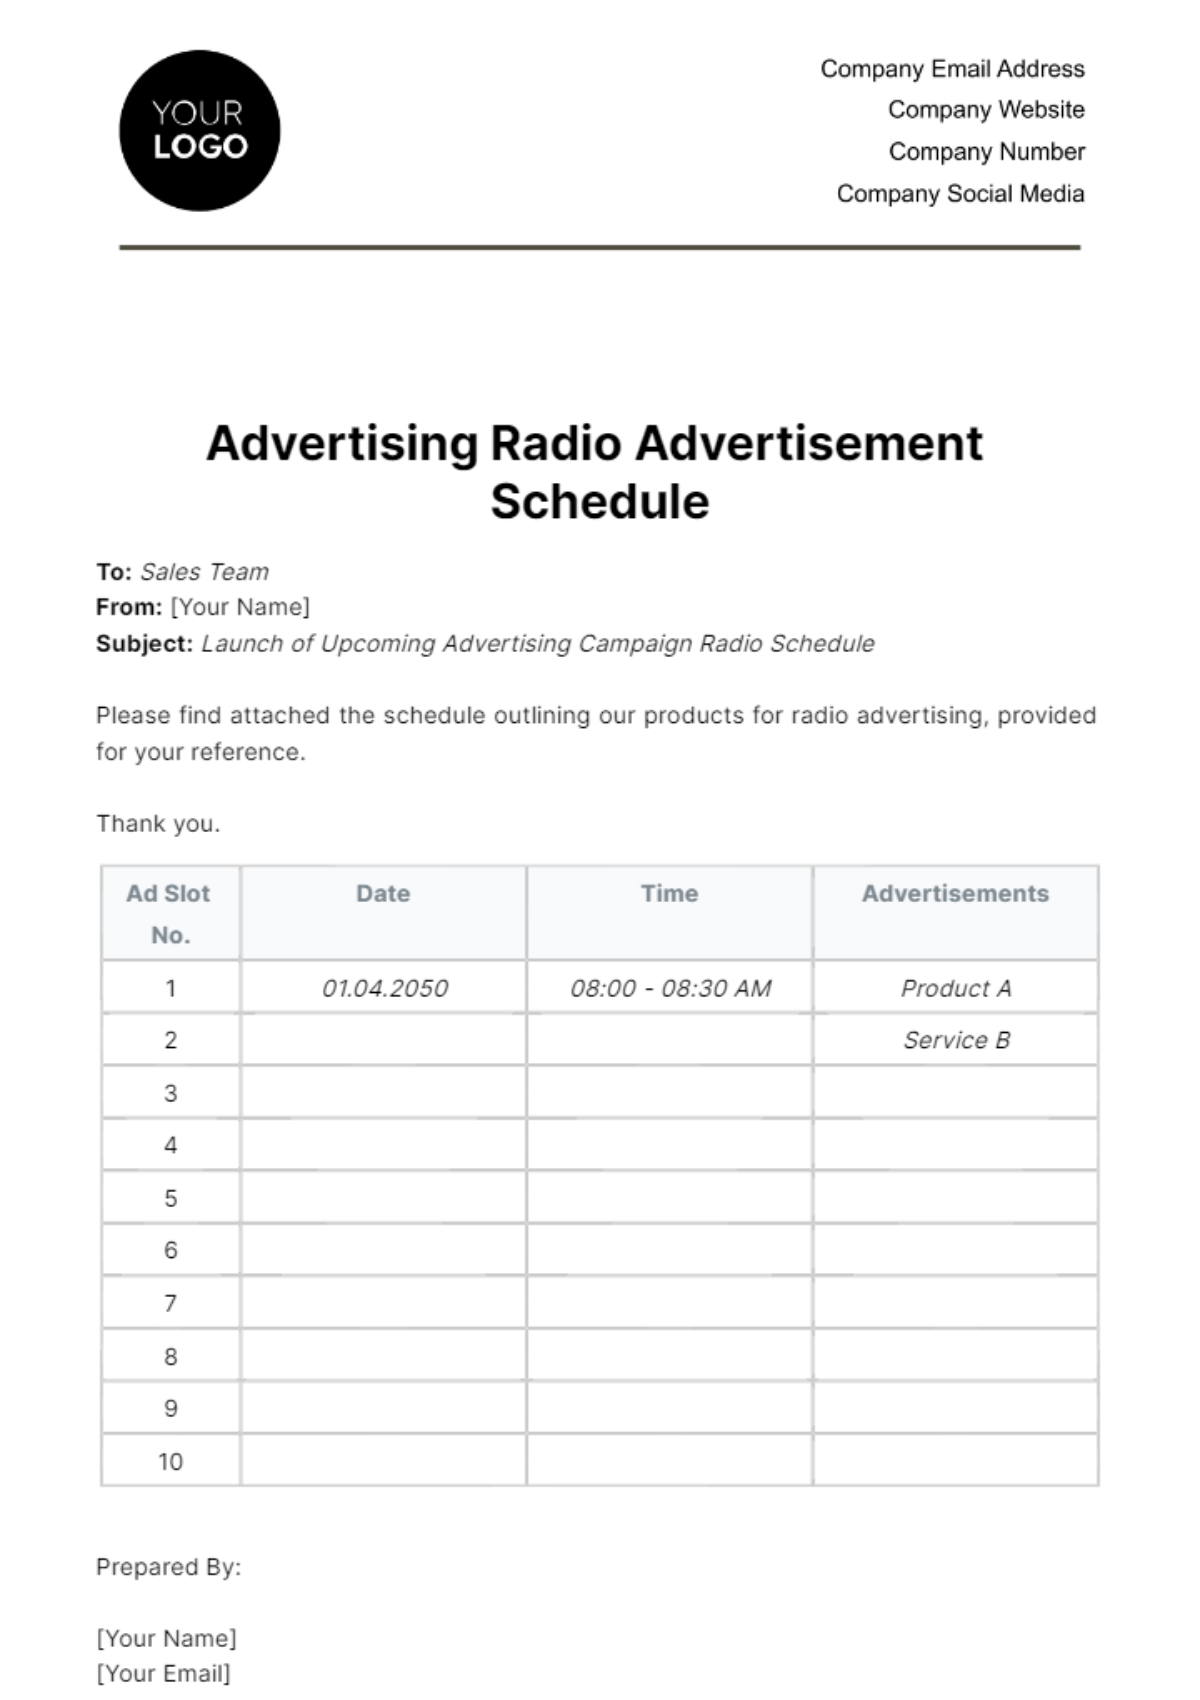 Free Advertising Radio Advertisement Schedule Template